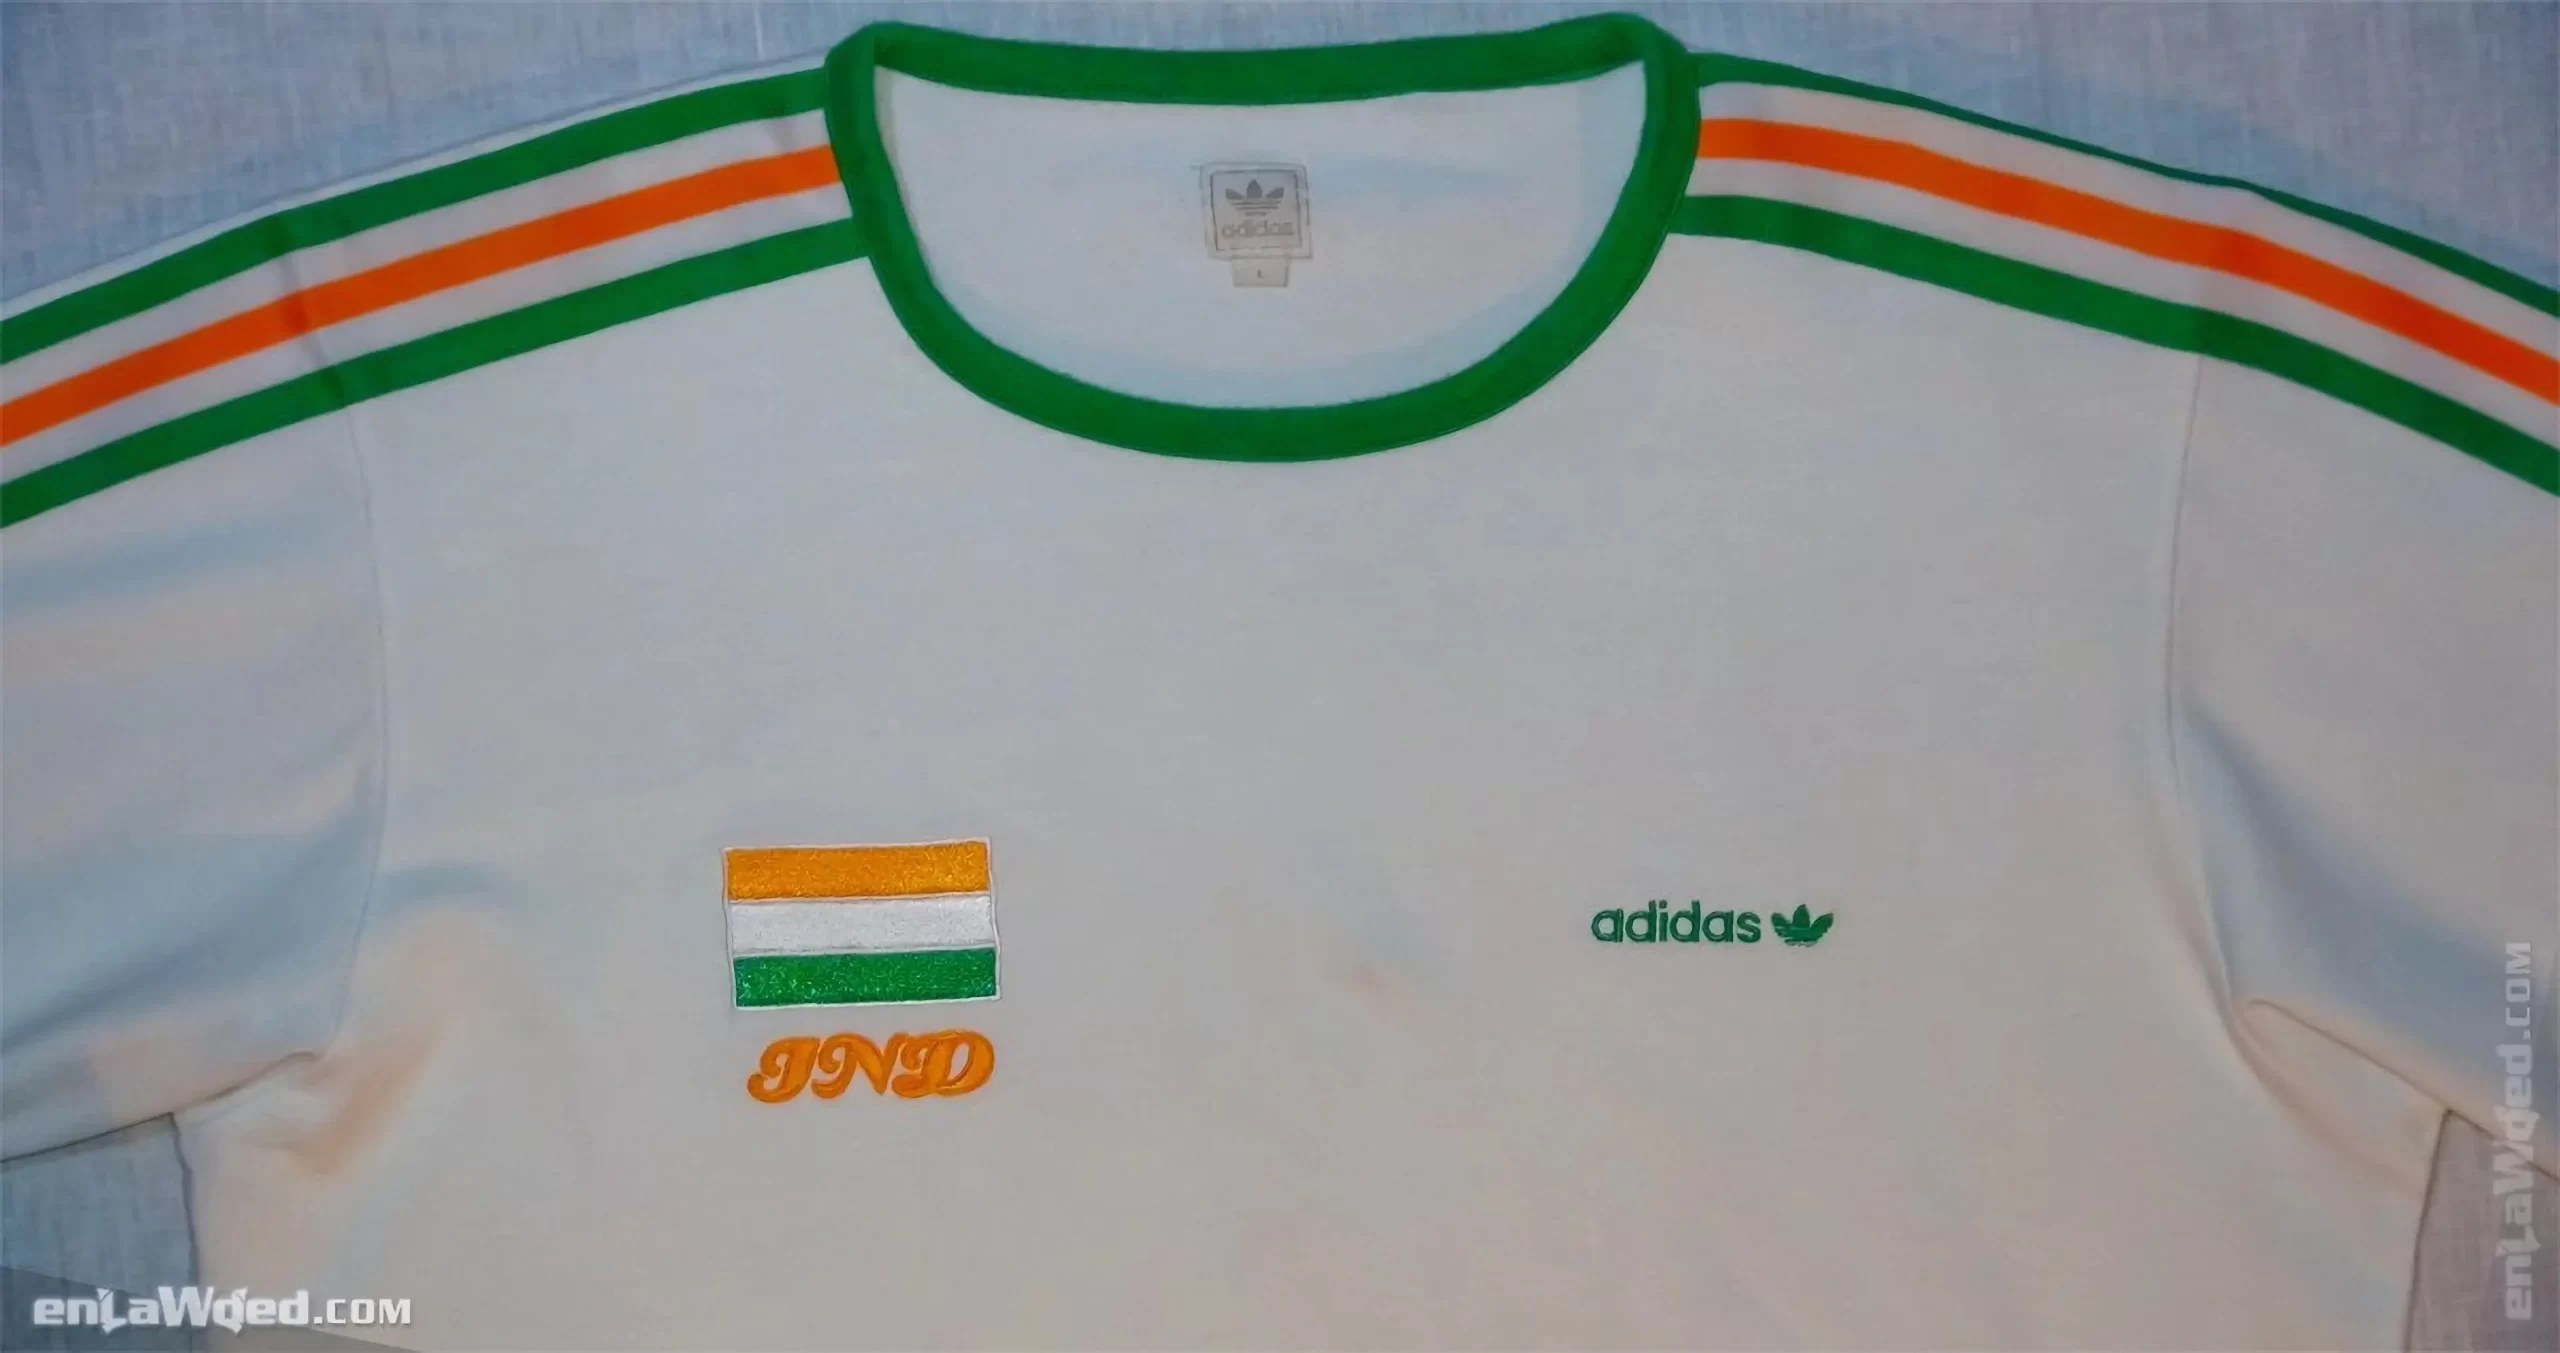 Men’s 2005 India T-Shirt by Adidas Originals: Proven (EnLawded.com file #lmcfvpavzf4dt91arrm)